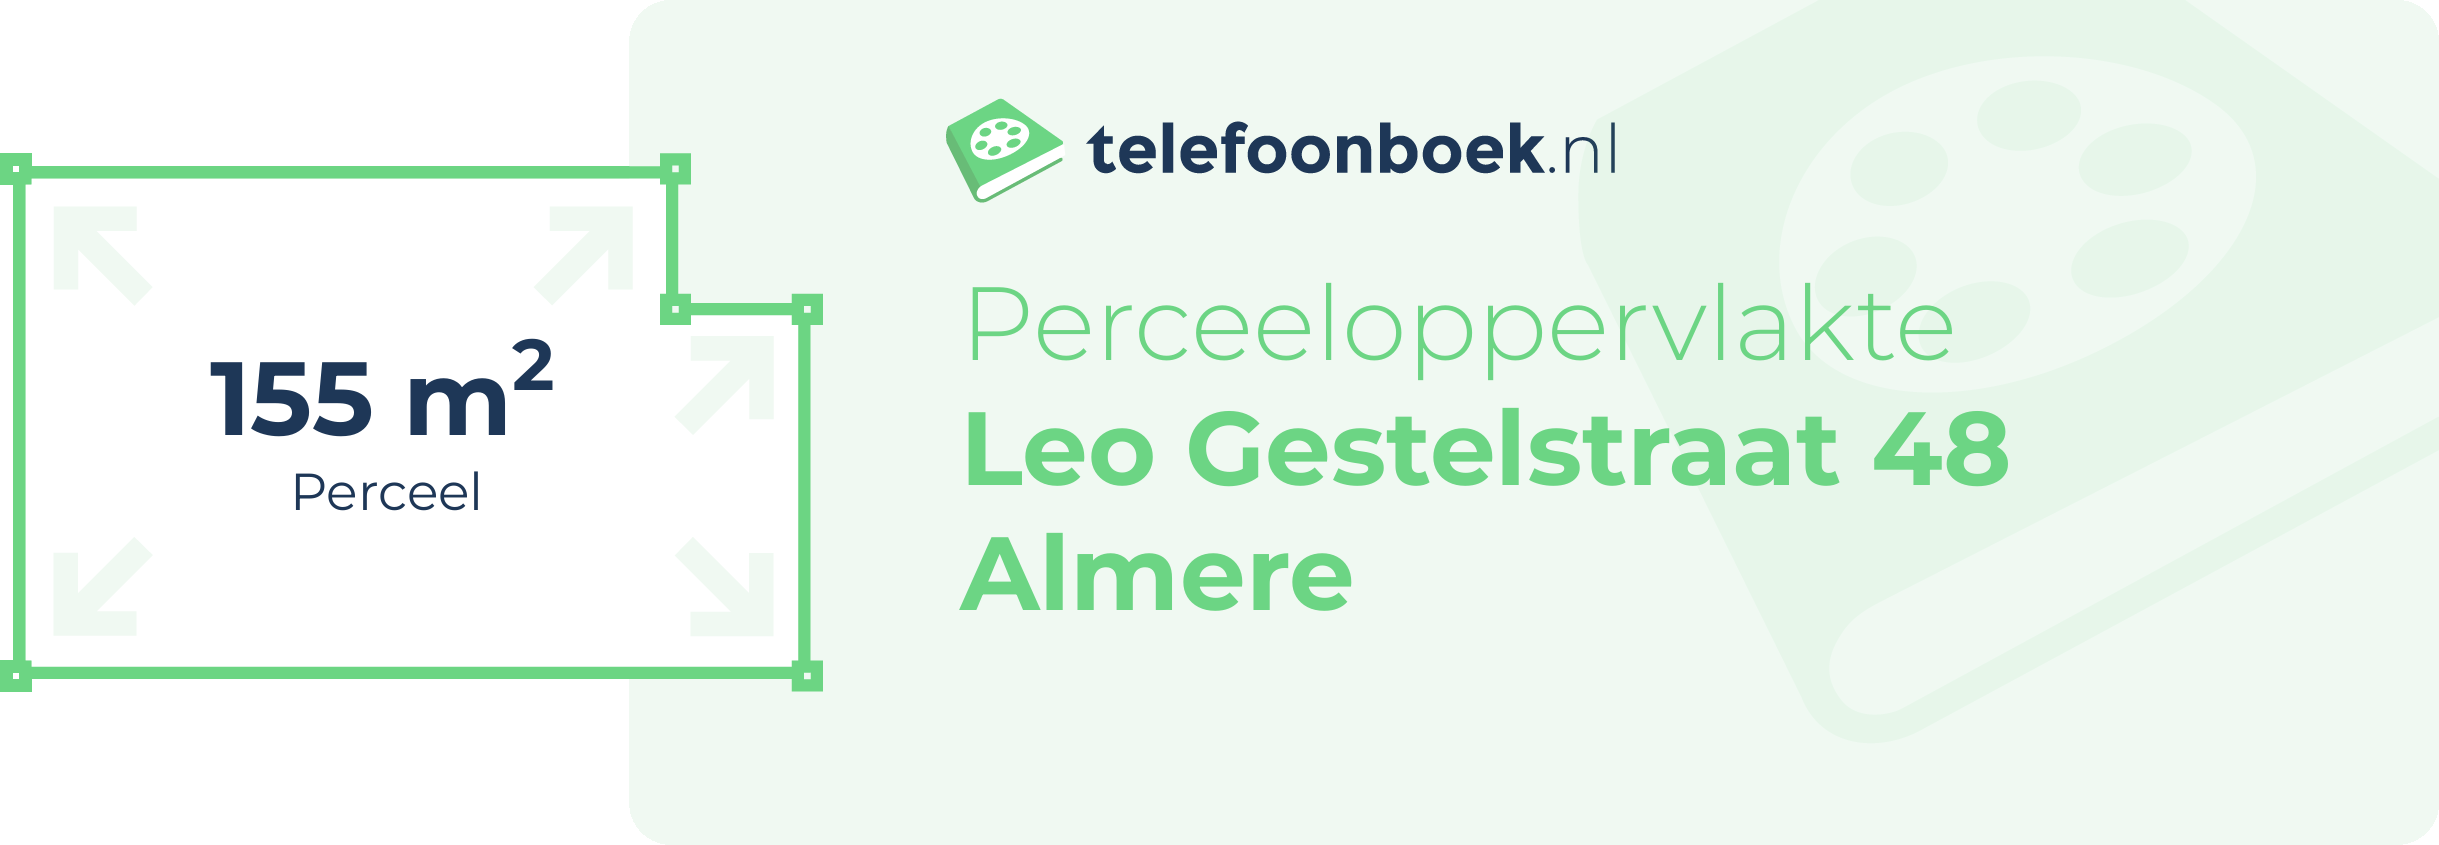 Perceeloppervlakte Leo Gestelstraat 48 Almere